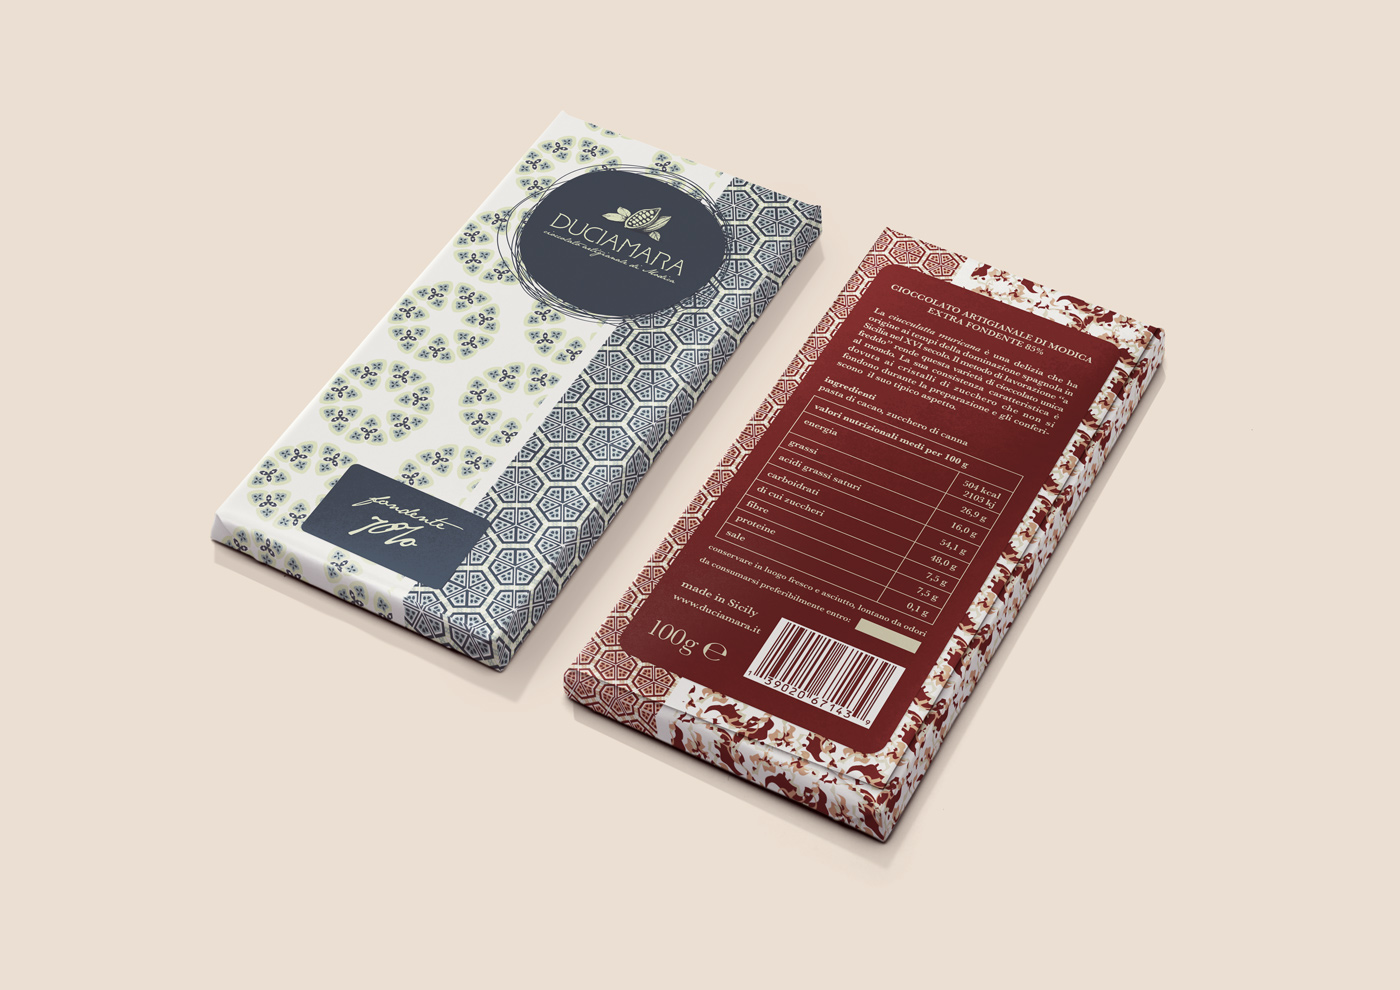 Duciamara modica sicily chocolate flavors sketches logo Label Patterns handcraft